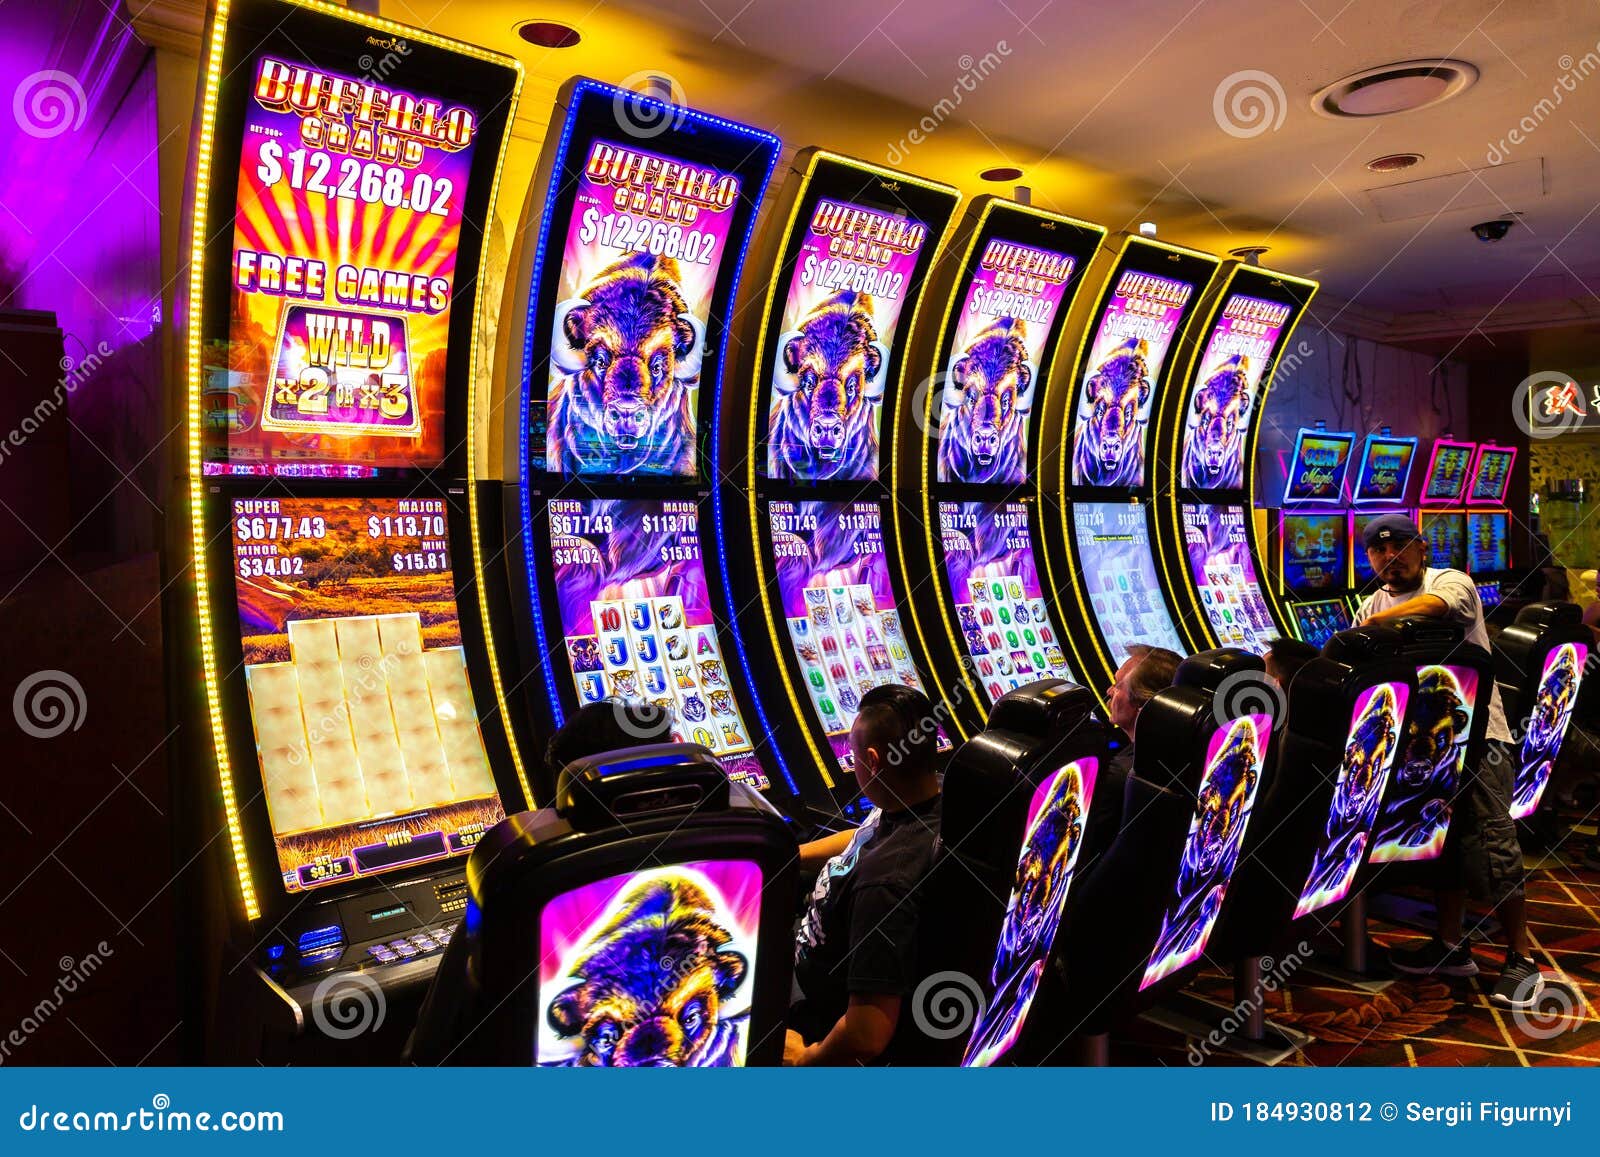 casino swiss online